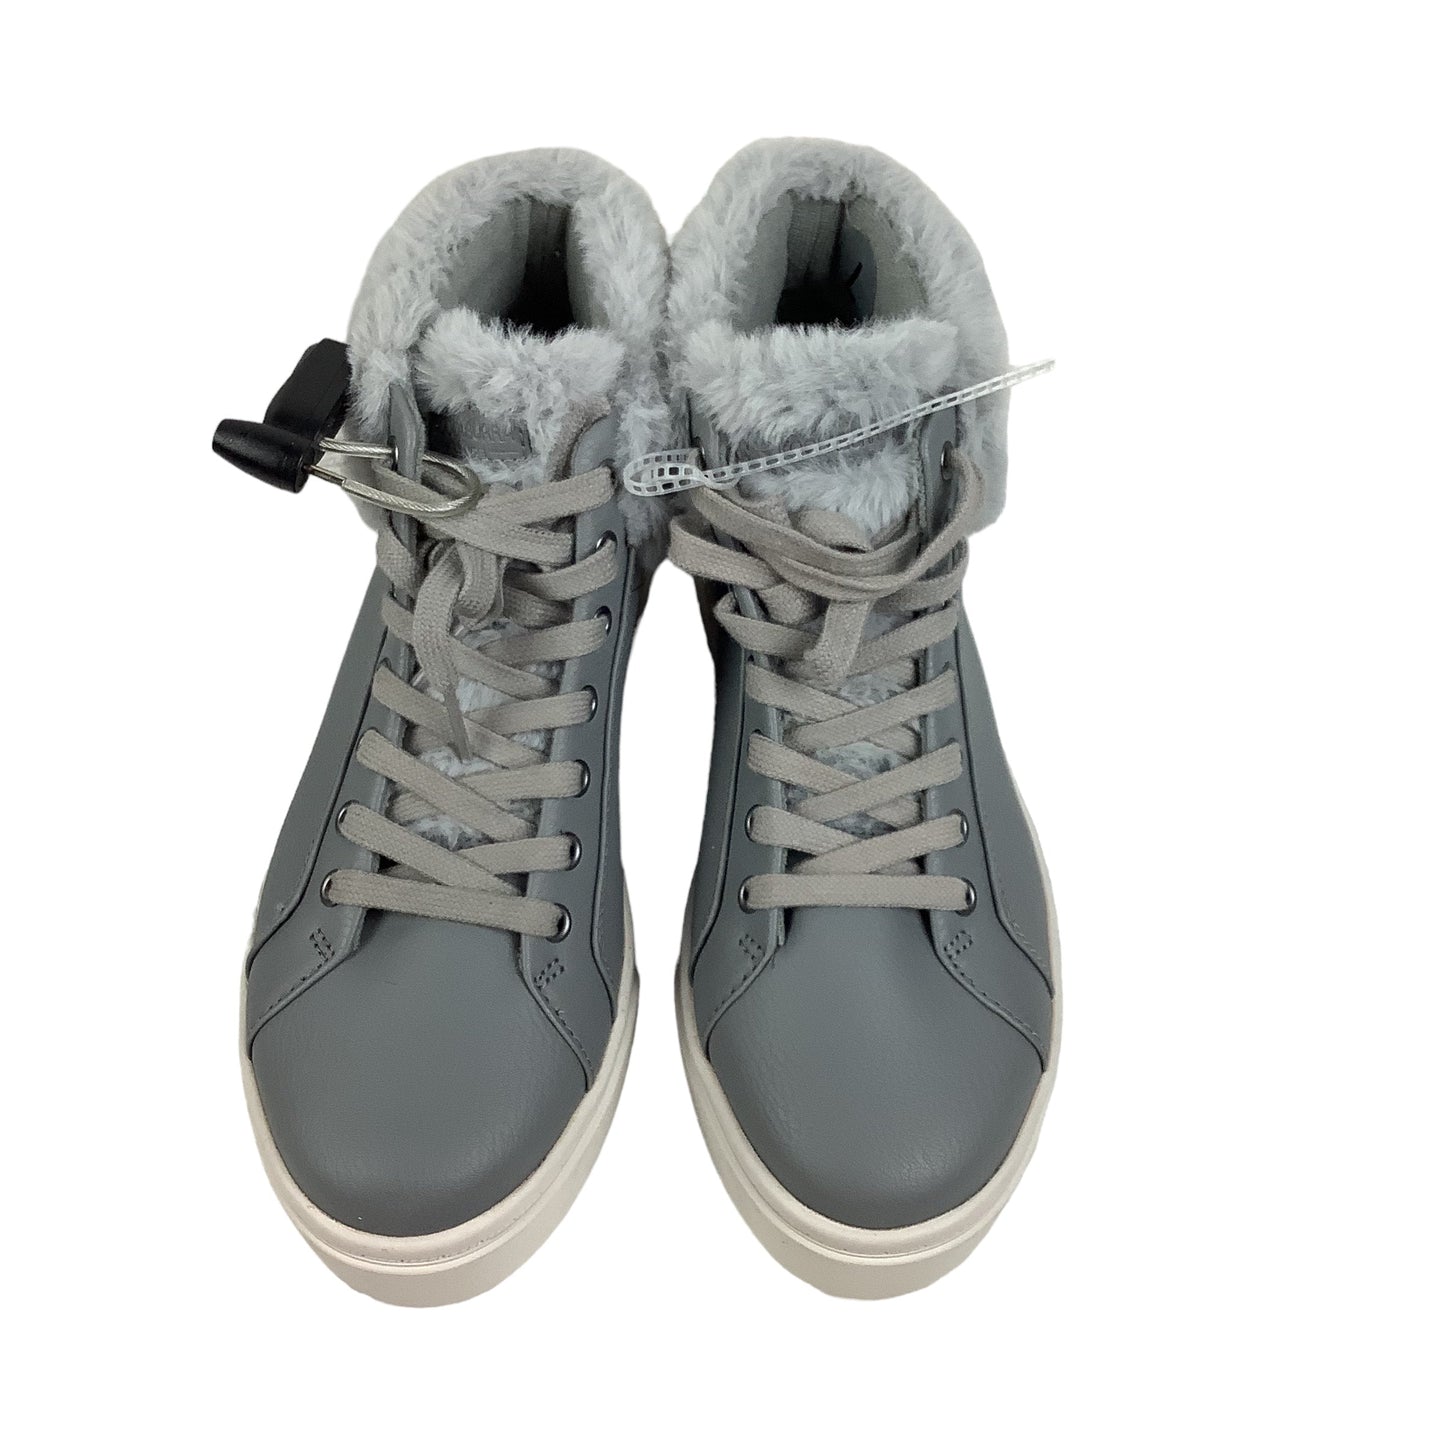 Grey Shoes Flats Koolaburra By Ugg, Size 7